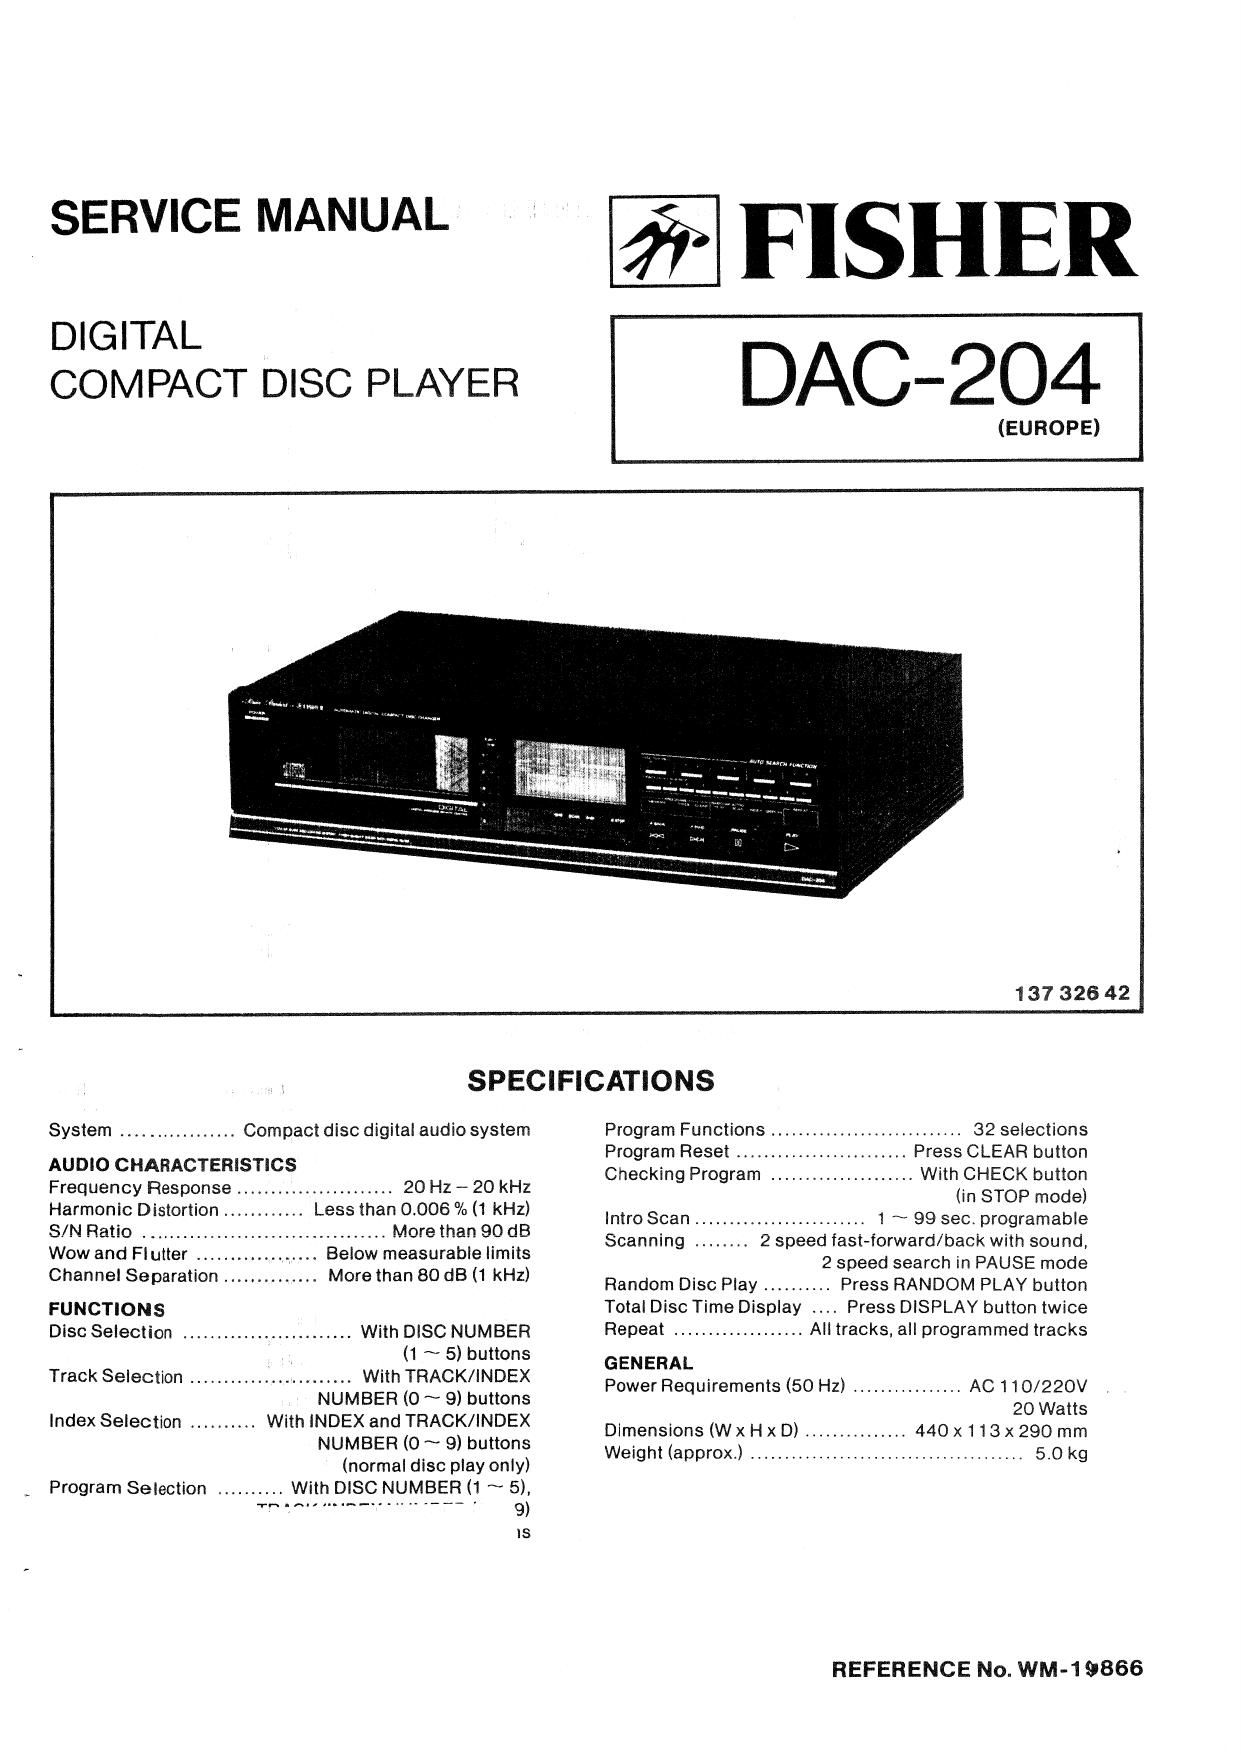 Fisher DAC 204 Service Manual